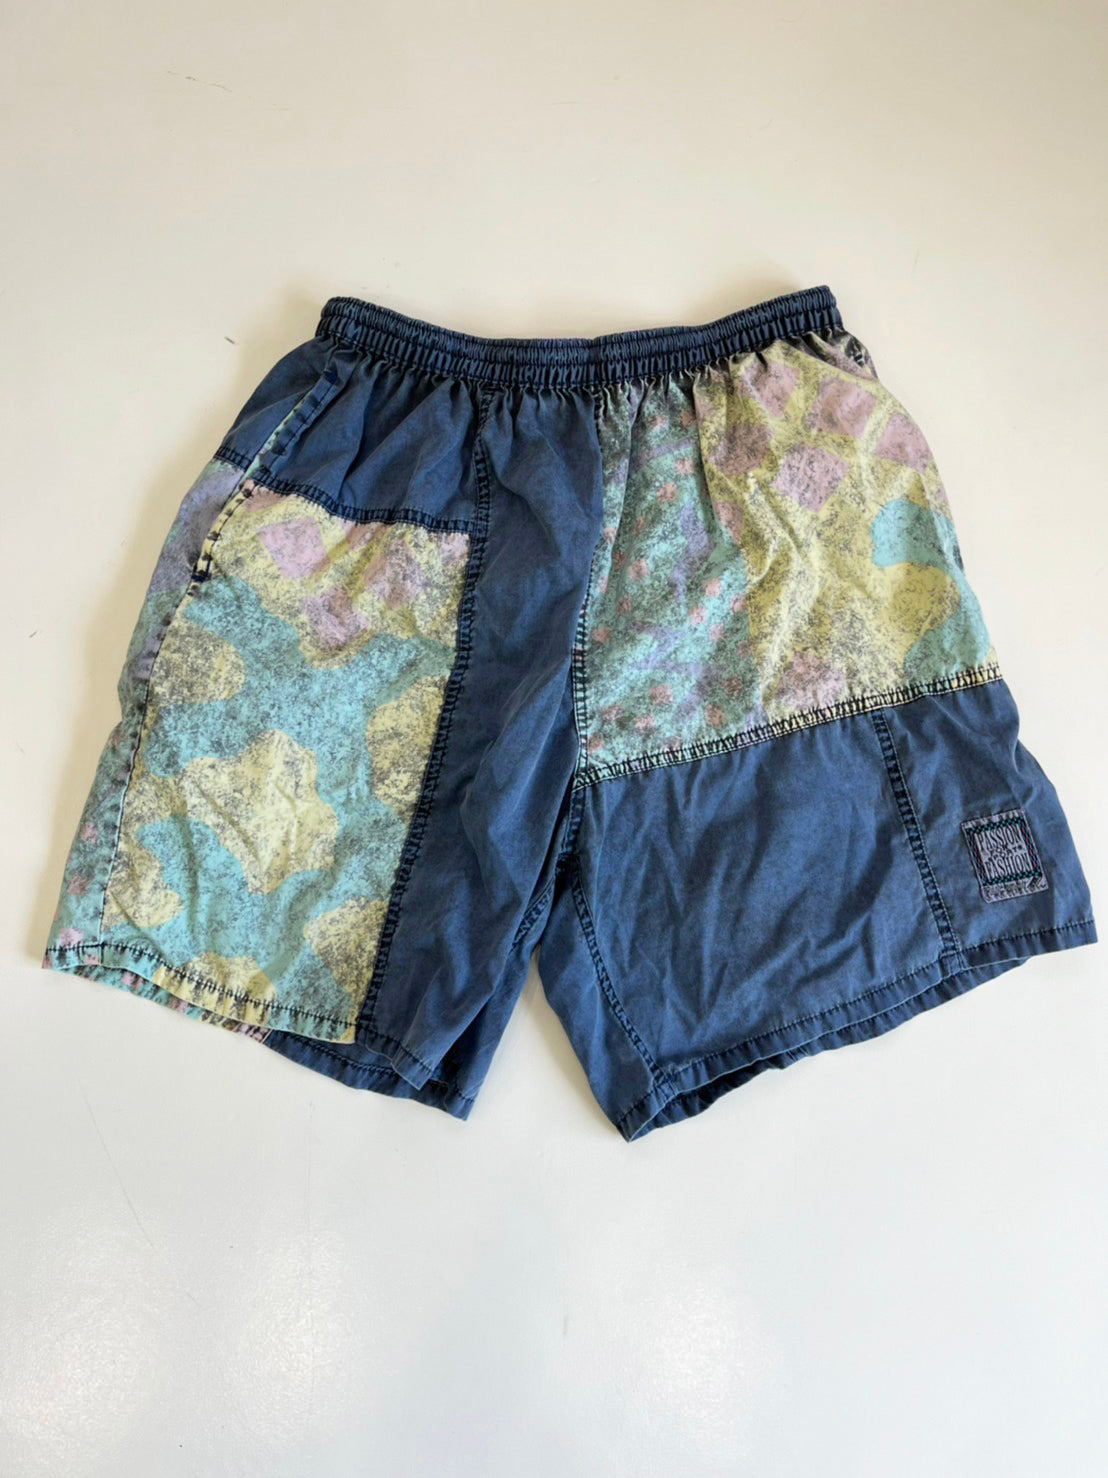 【Rucanor 】 Passion for sports fashion vintage beach shorts   水着 サーフパンツ ボードショーツ (XXLサイズ）